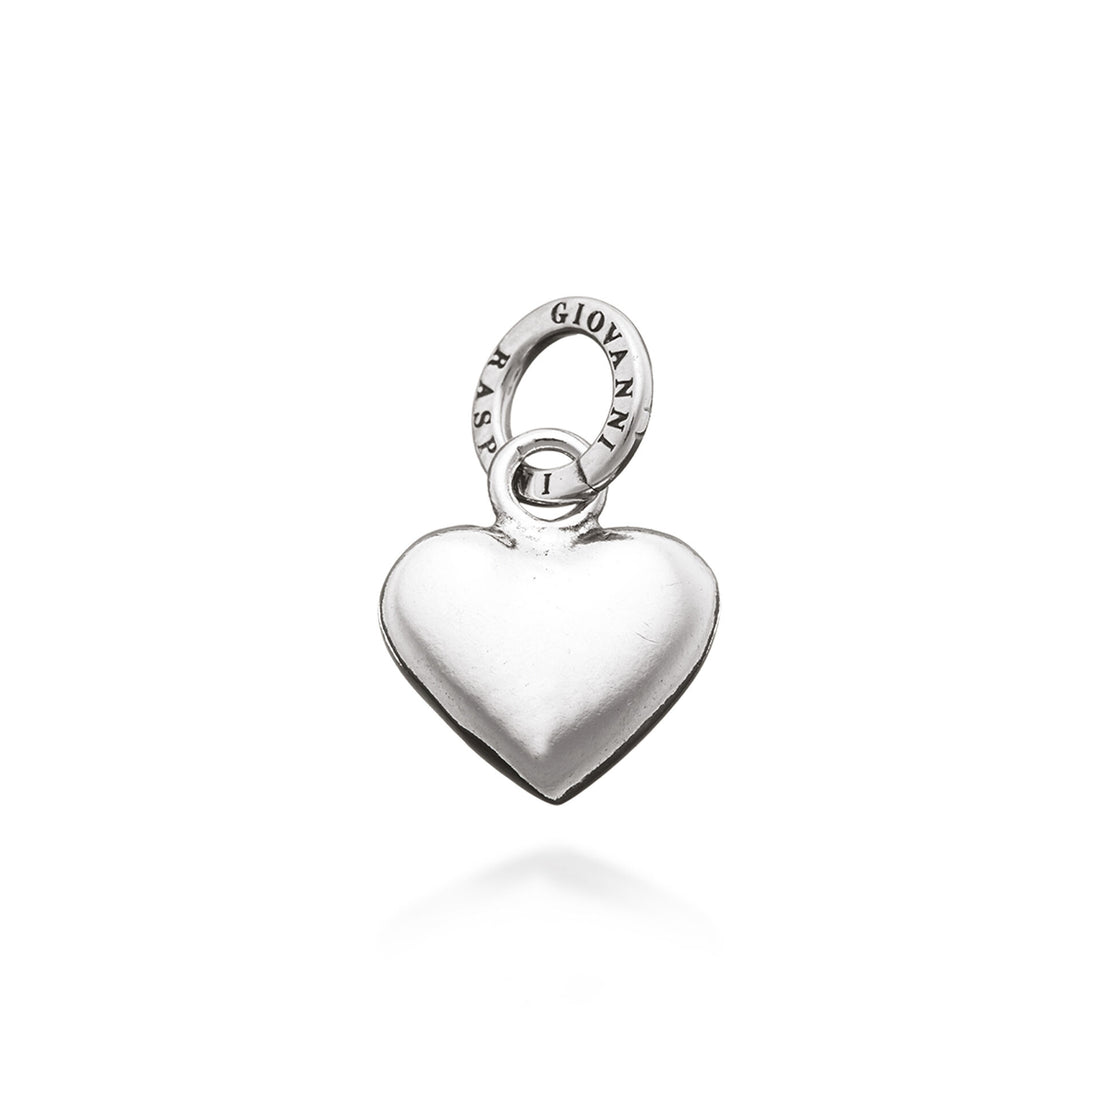 Giovanni Raspini Silver Heart Charm - Robert Anthony Jewellers, Edinburgh